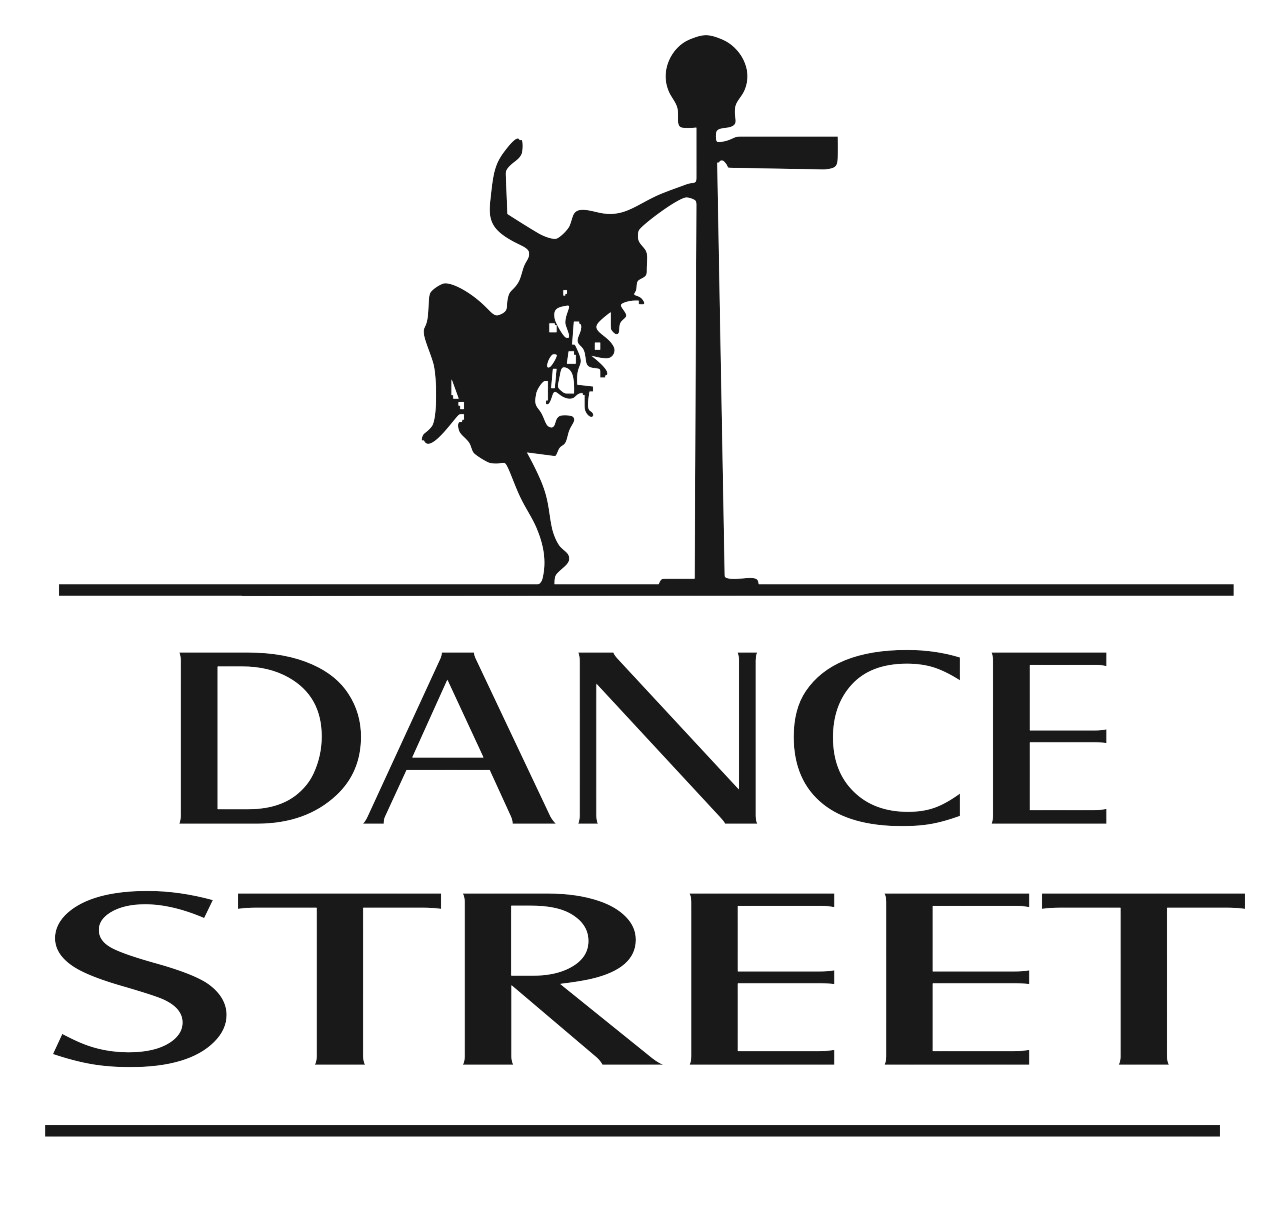 Hair Elastics - Dance Street